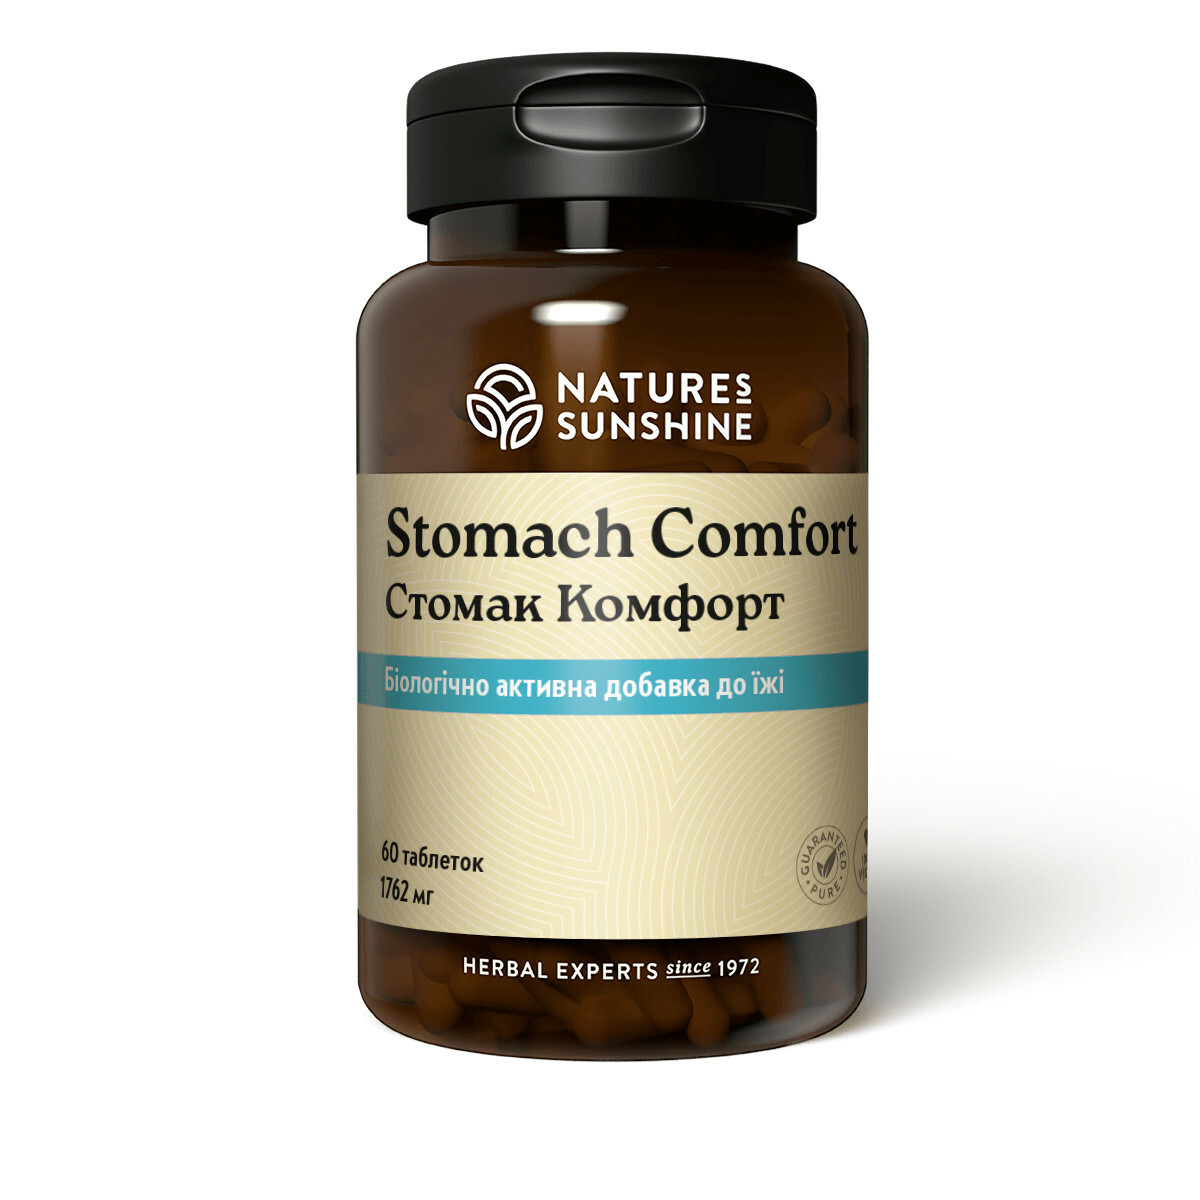 Stomach Comfort - Стомак Комфорт - БАД Nature's Sunshine Products (NSP)